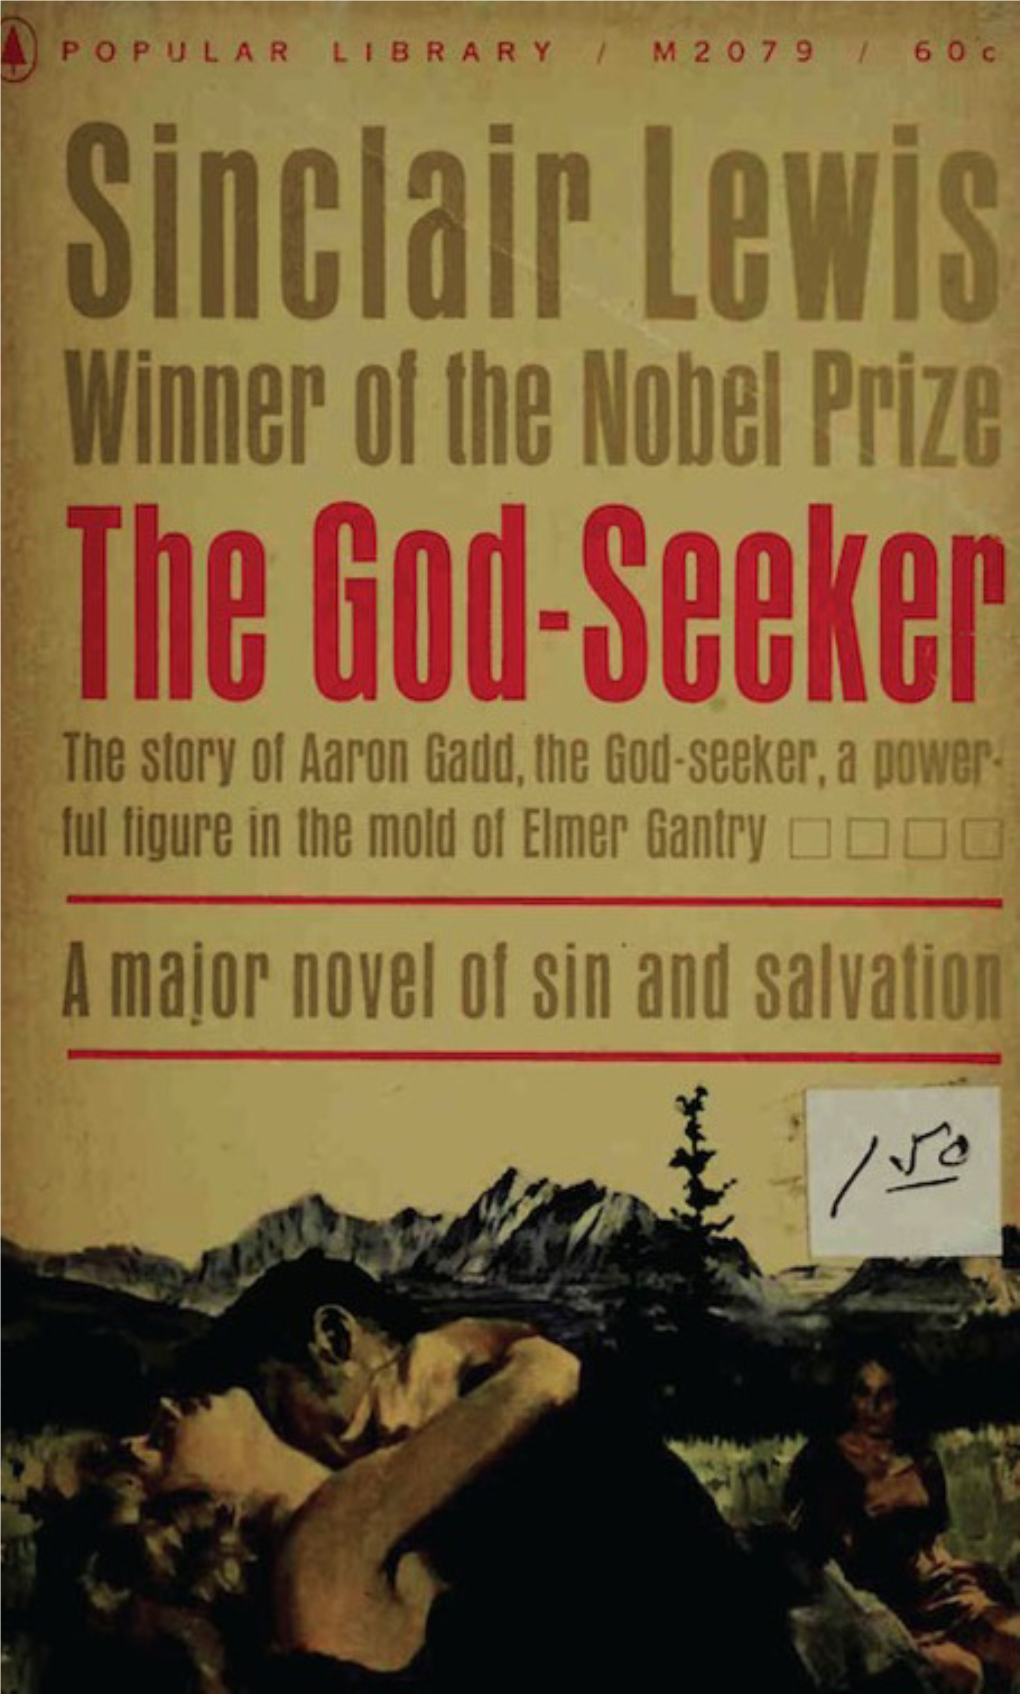 The God-Seeker